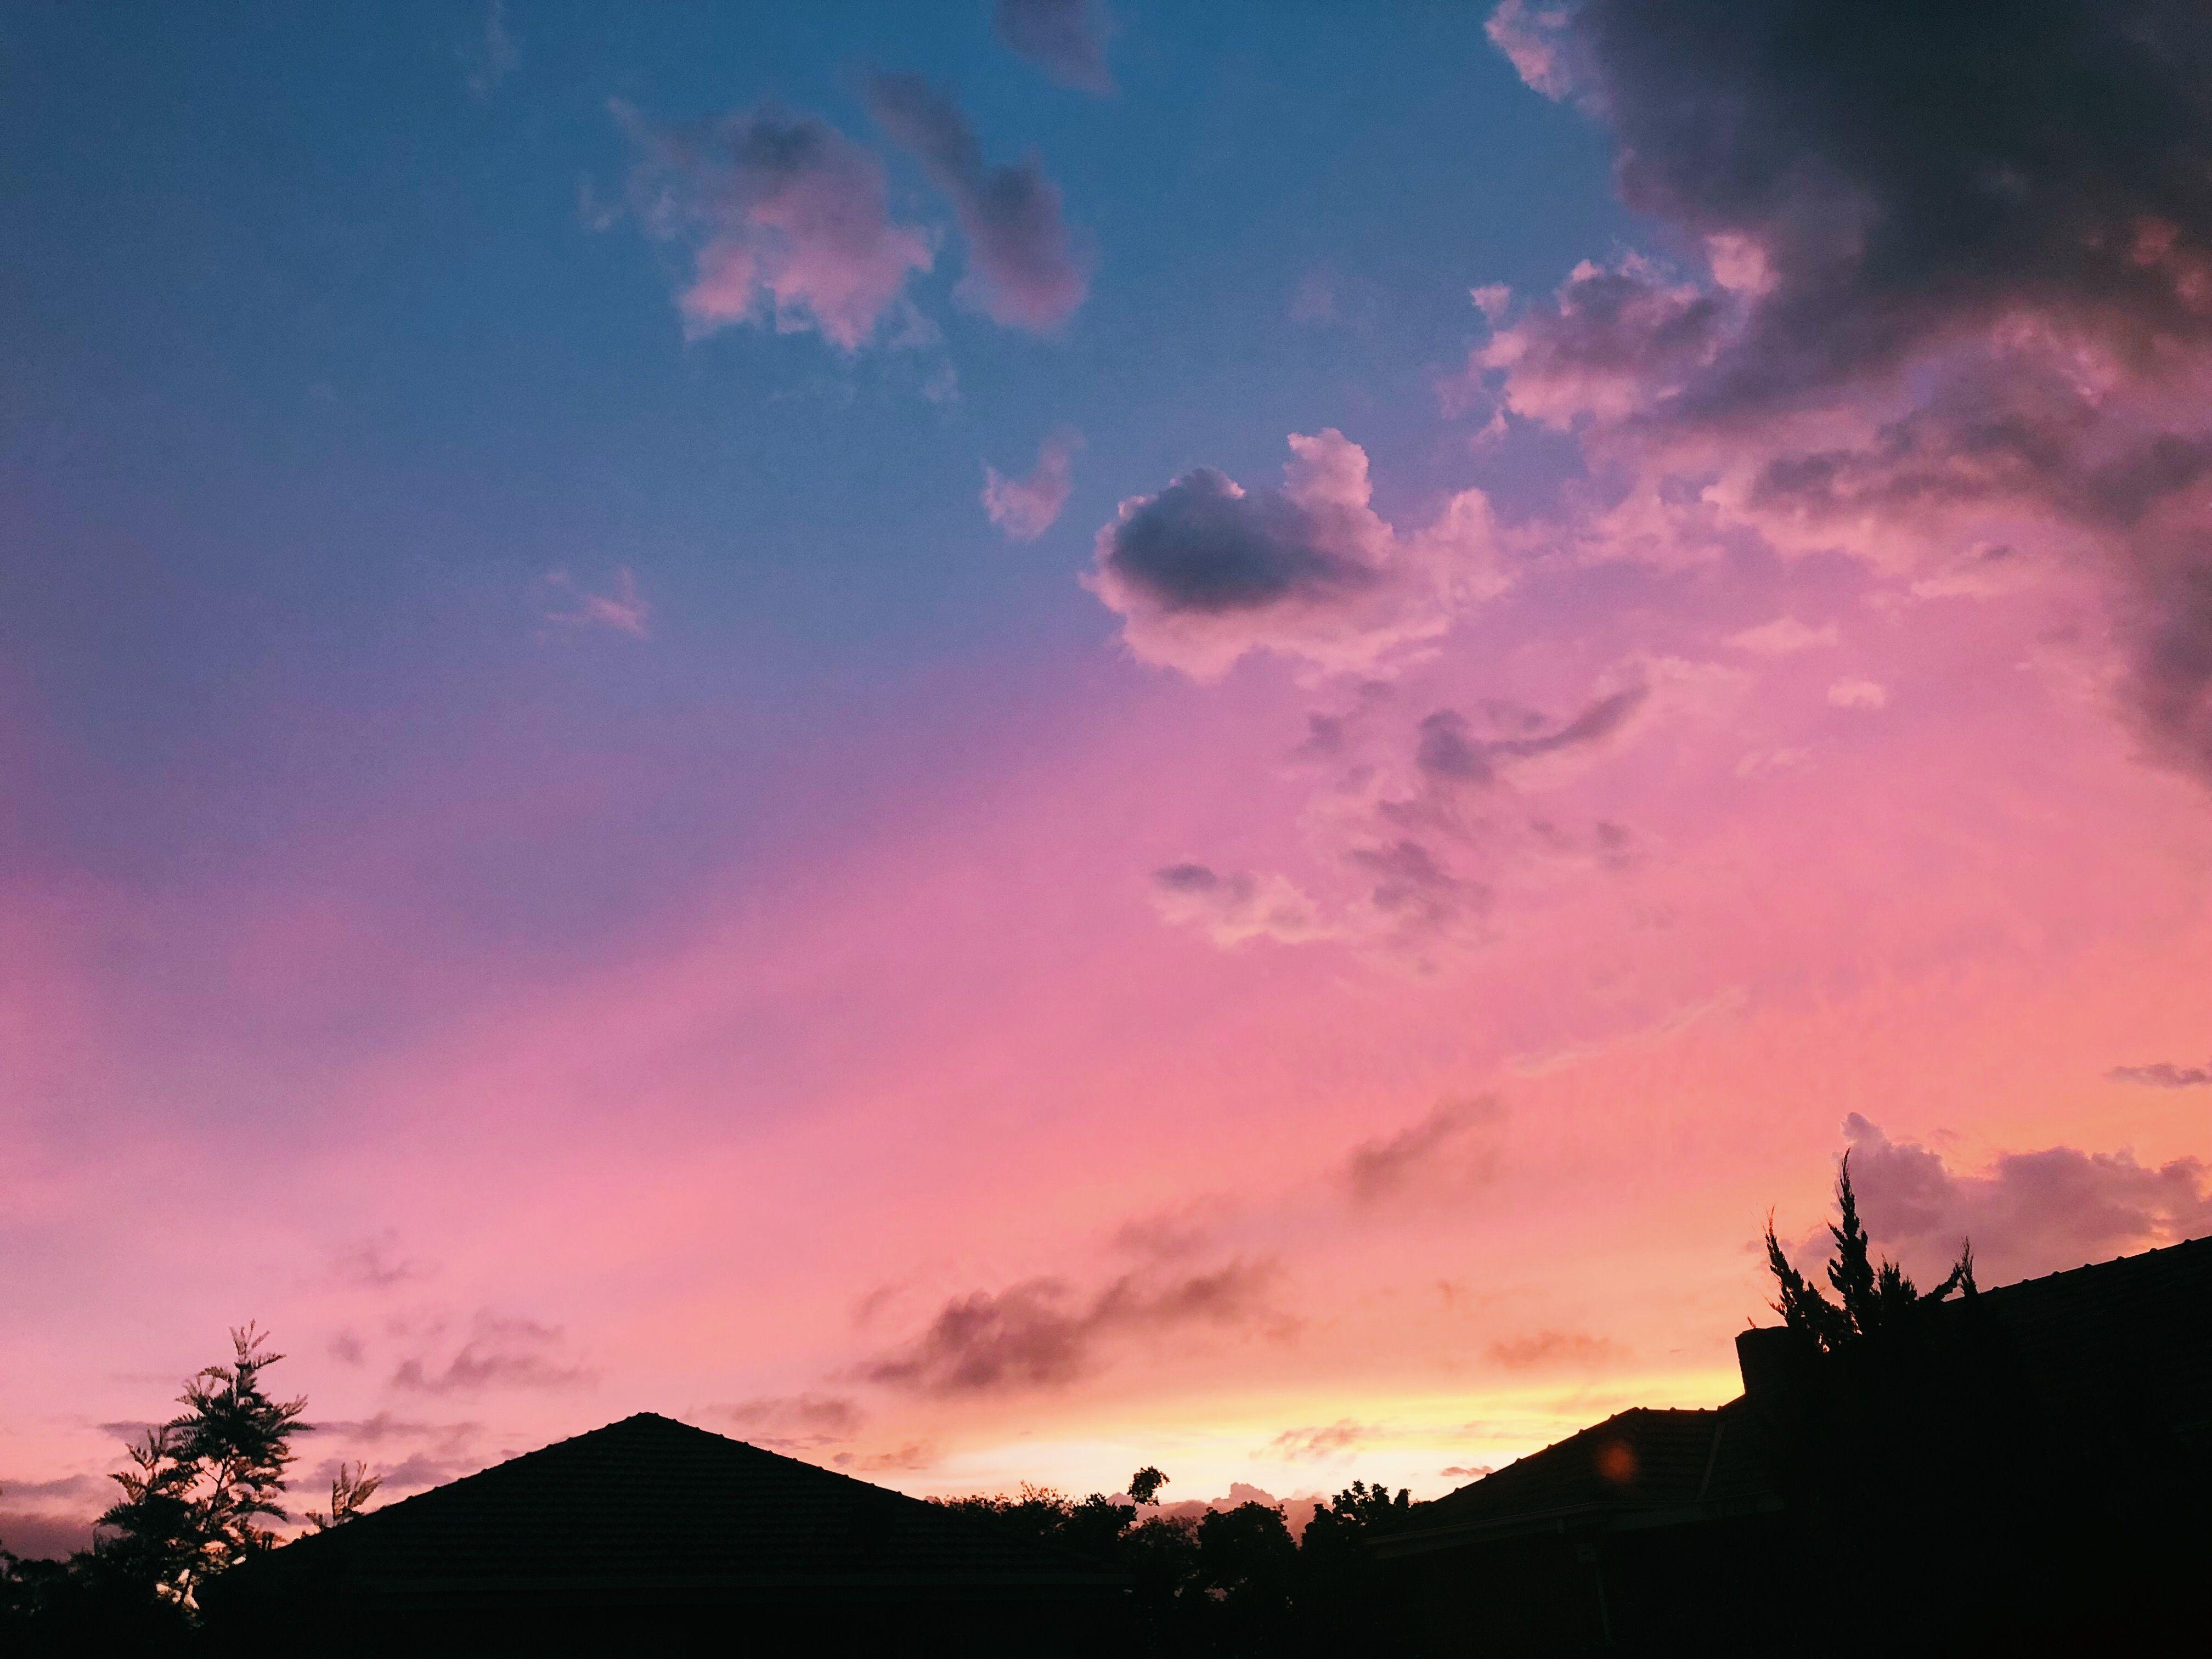 Sky, tumblr, sunset, sunrise, tumblr sunset. Sky aesthetic